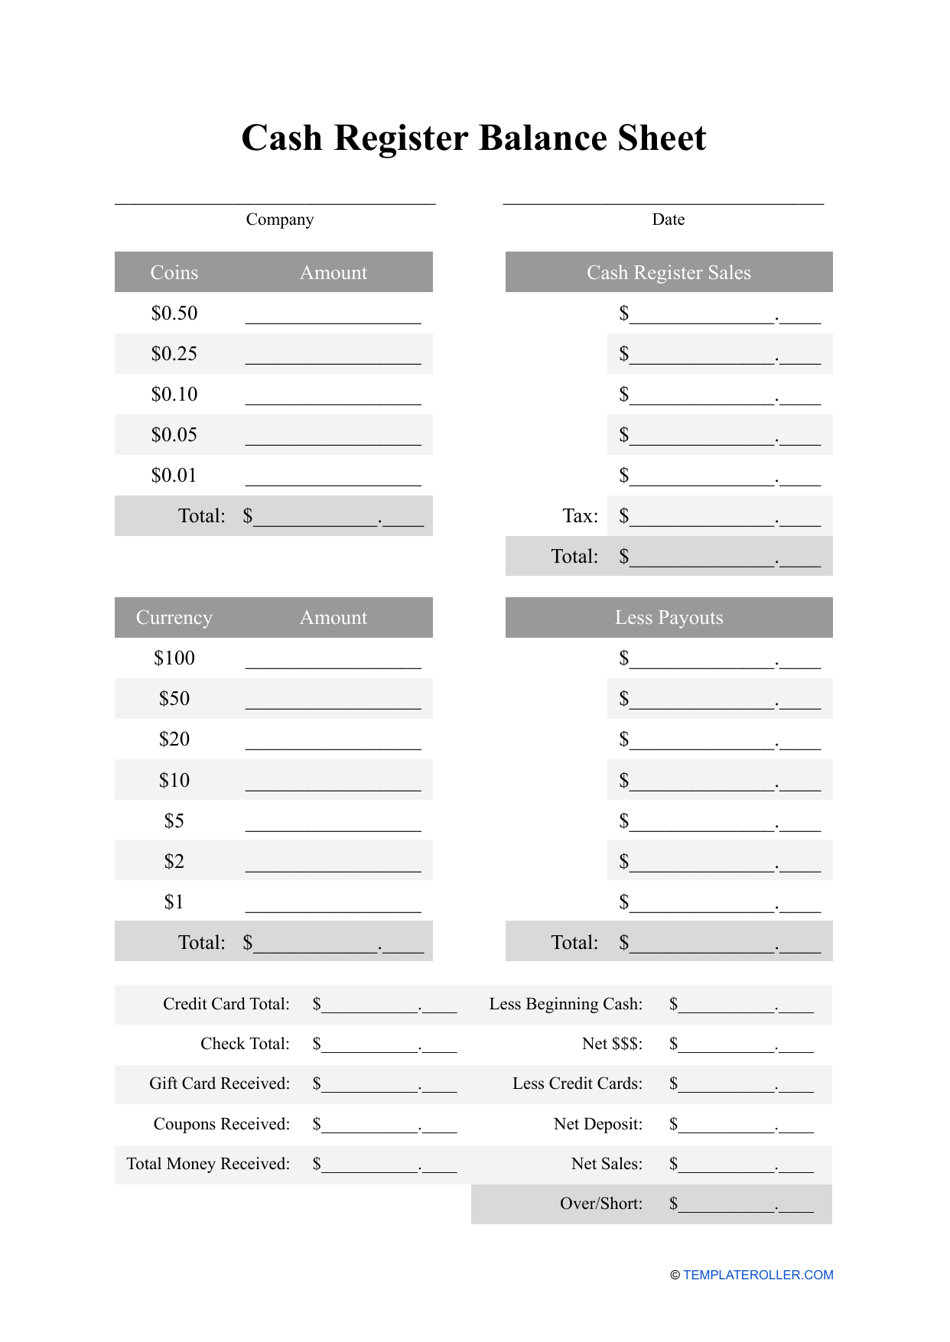 Cash Register Balance Sheet Template Download Printable PDF